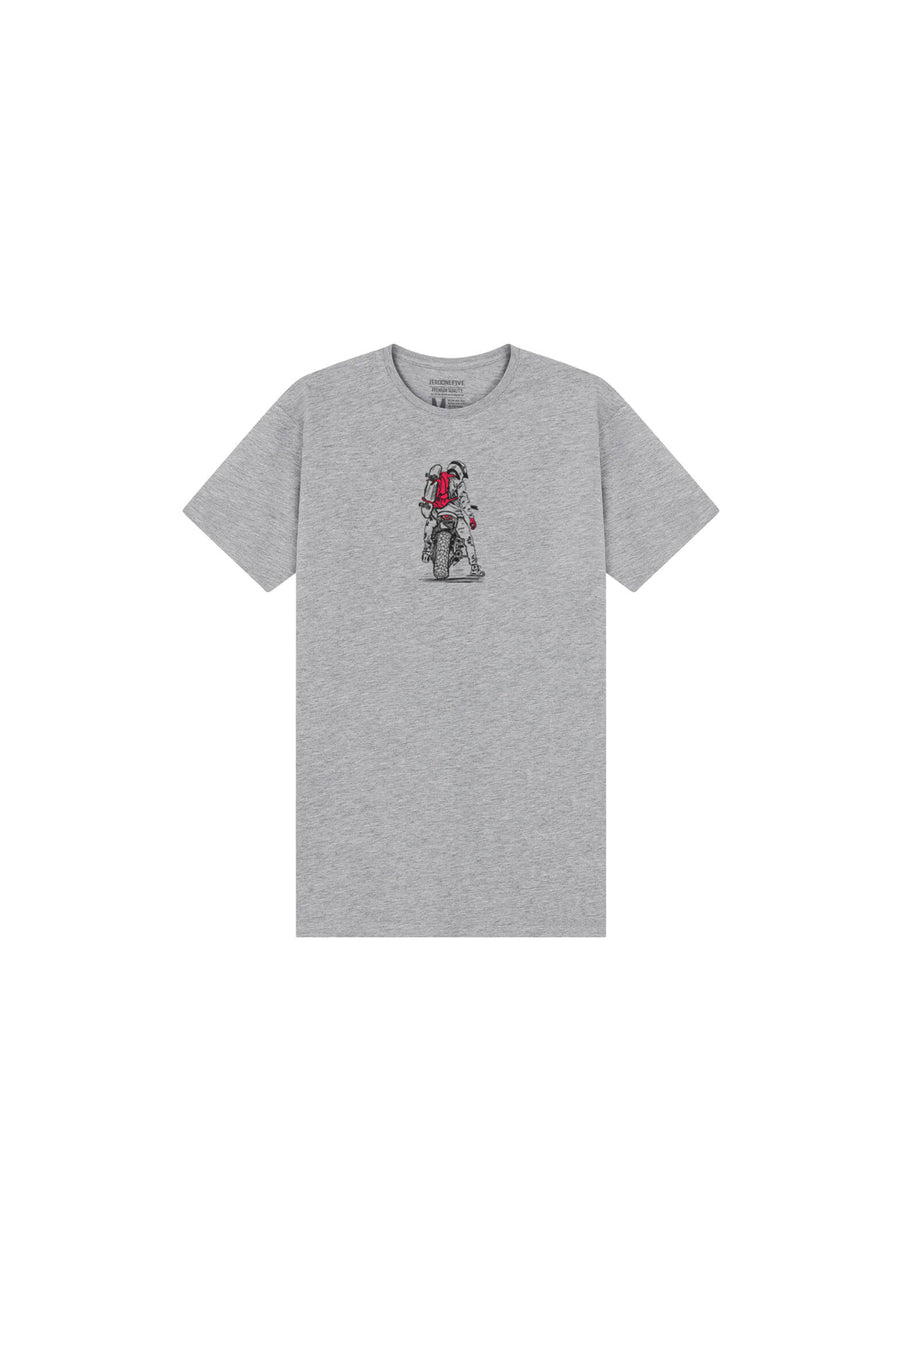 Kids' Supermoto T-Shirt Grey